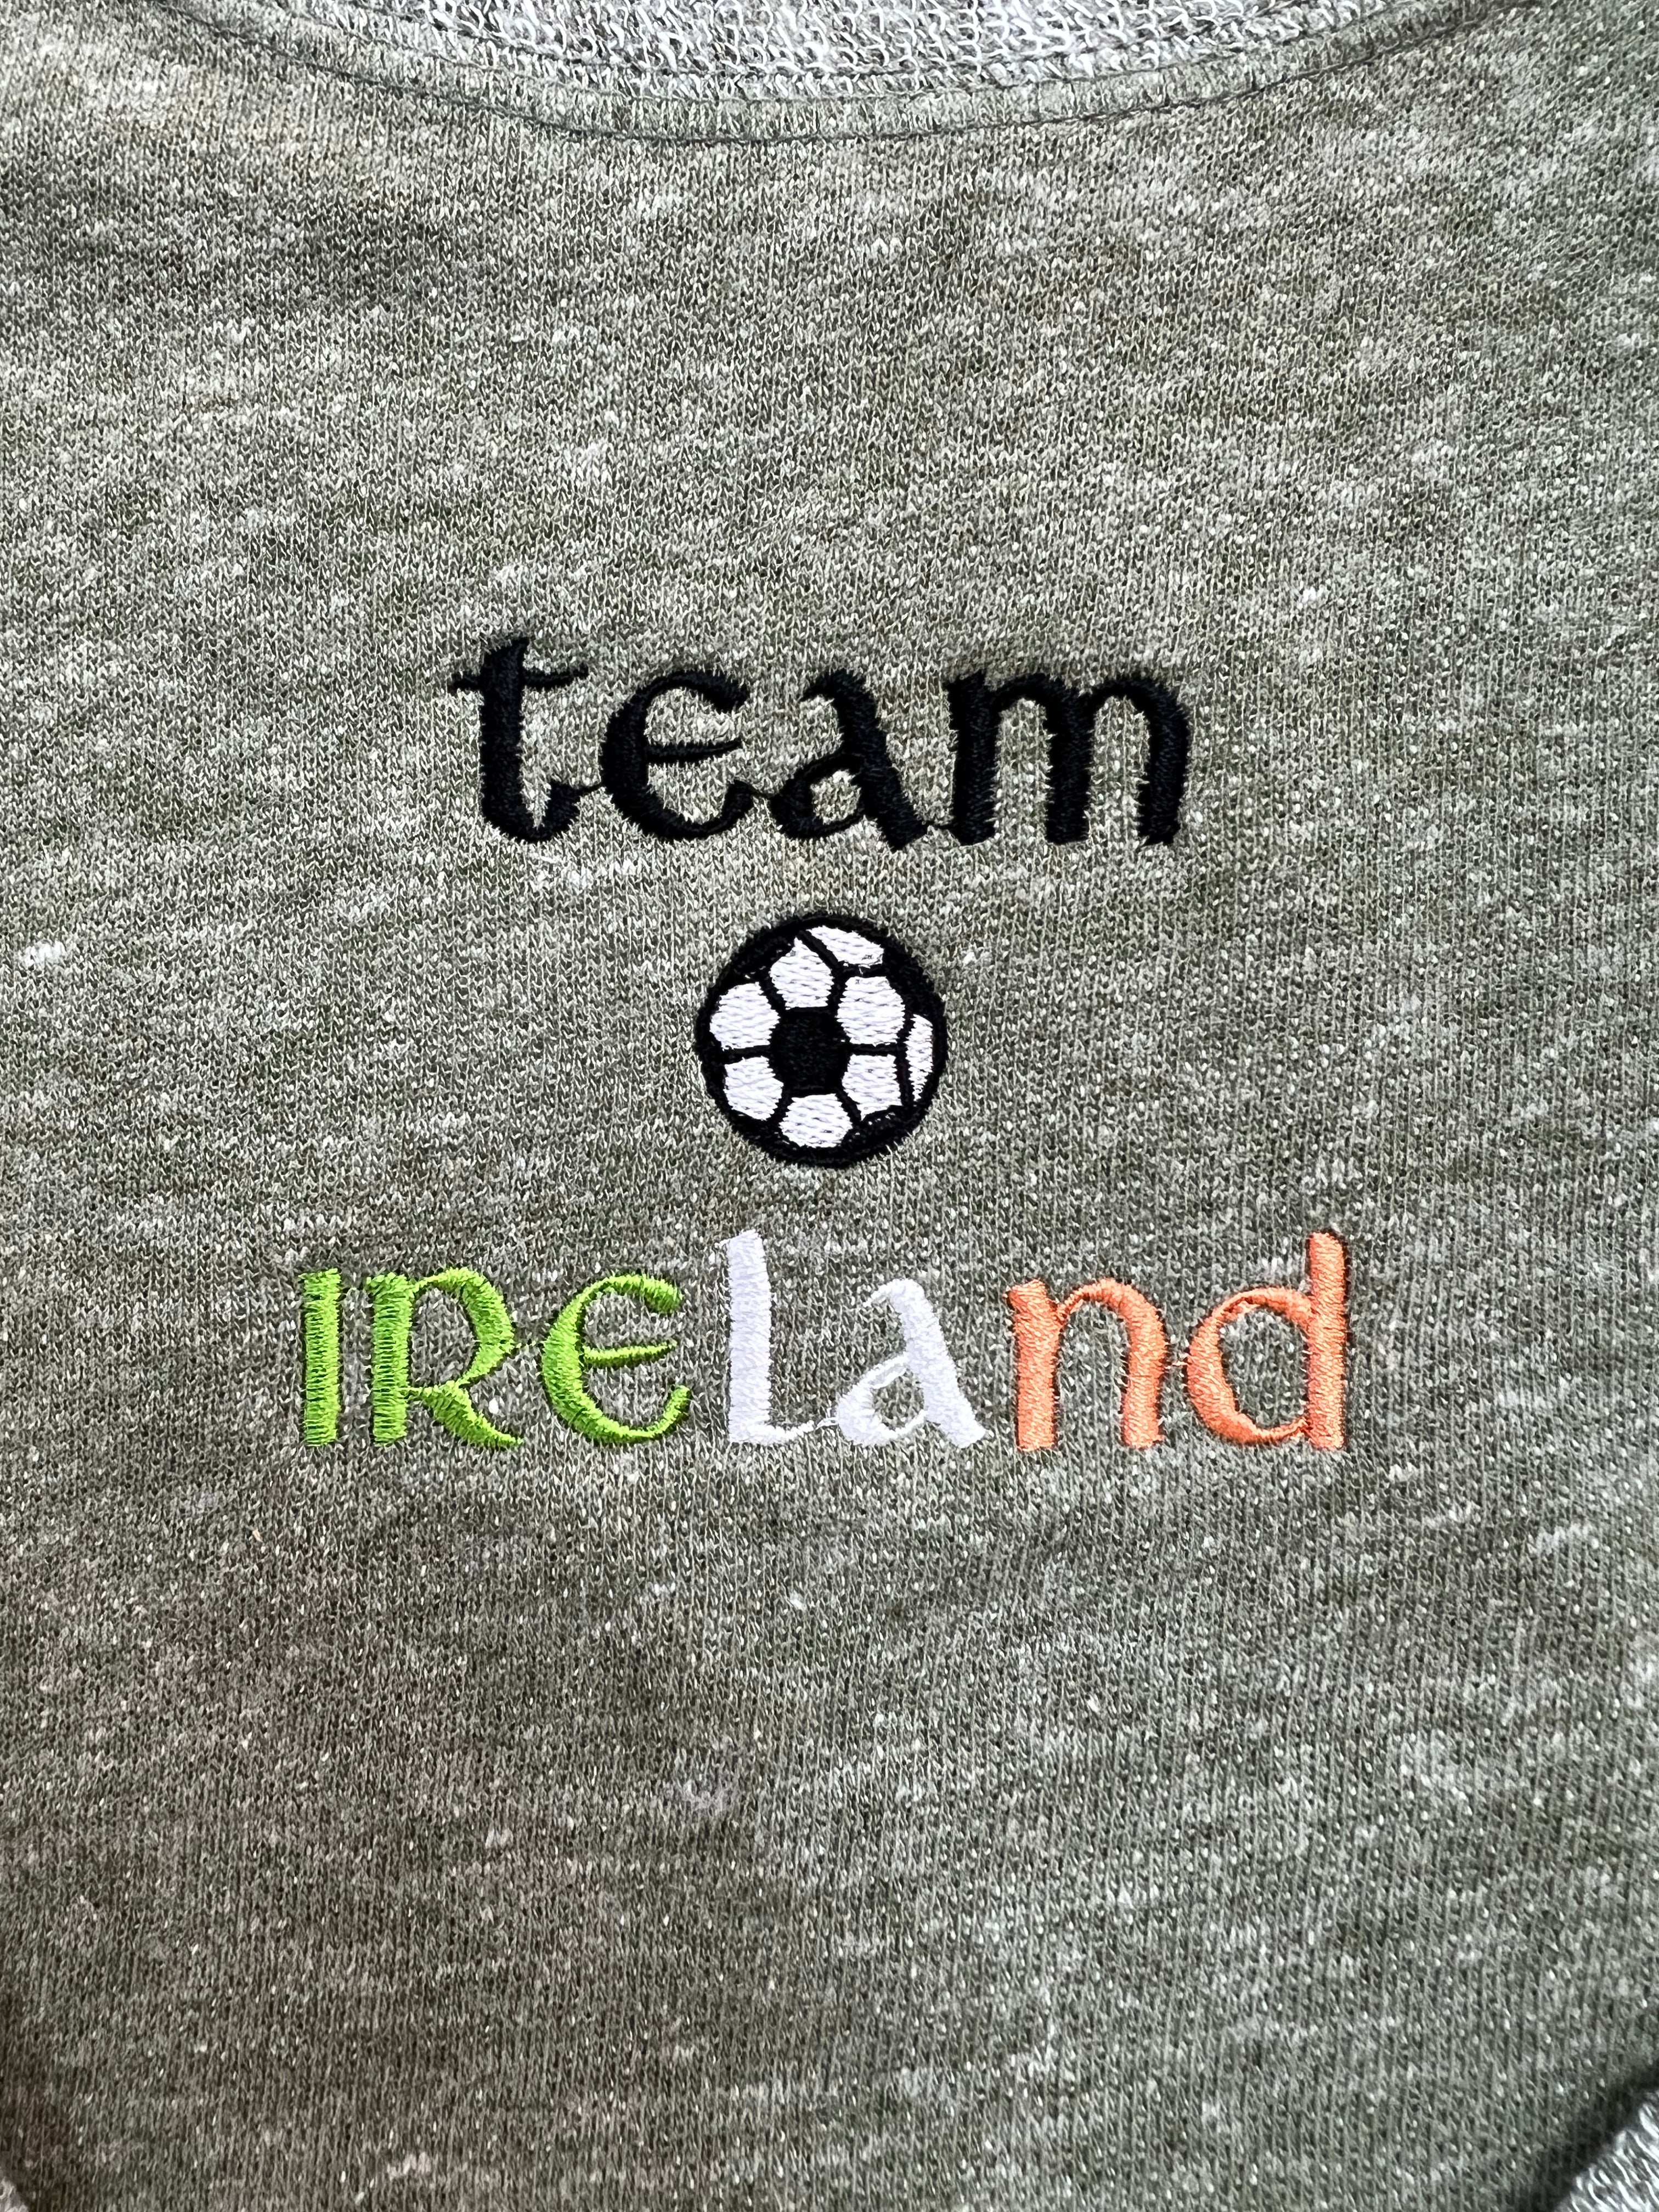 Toddler Crew neck sweater embroidered Team Ireland